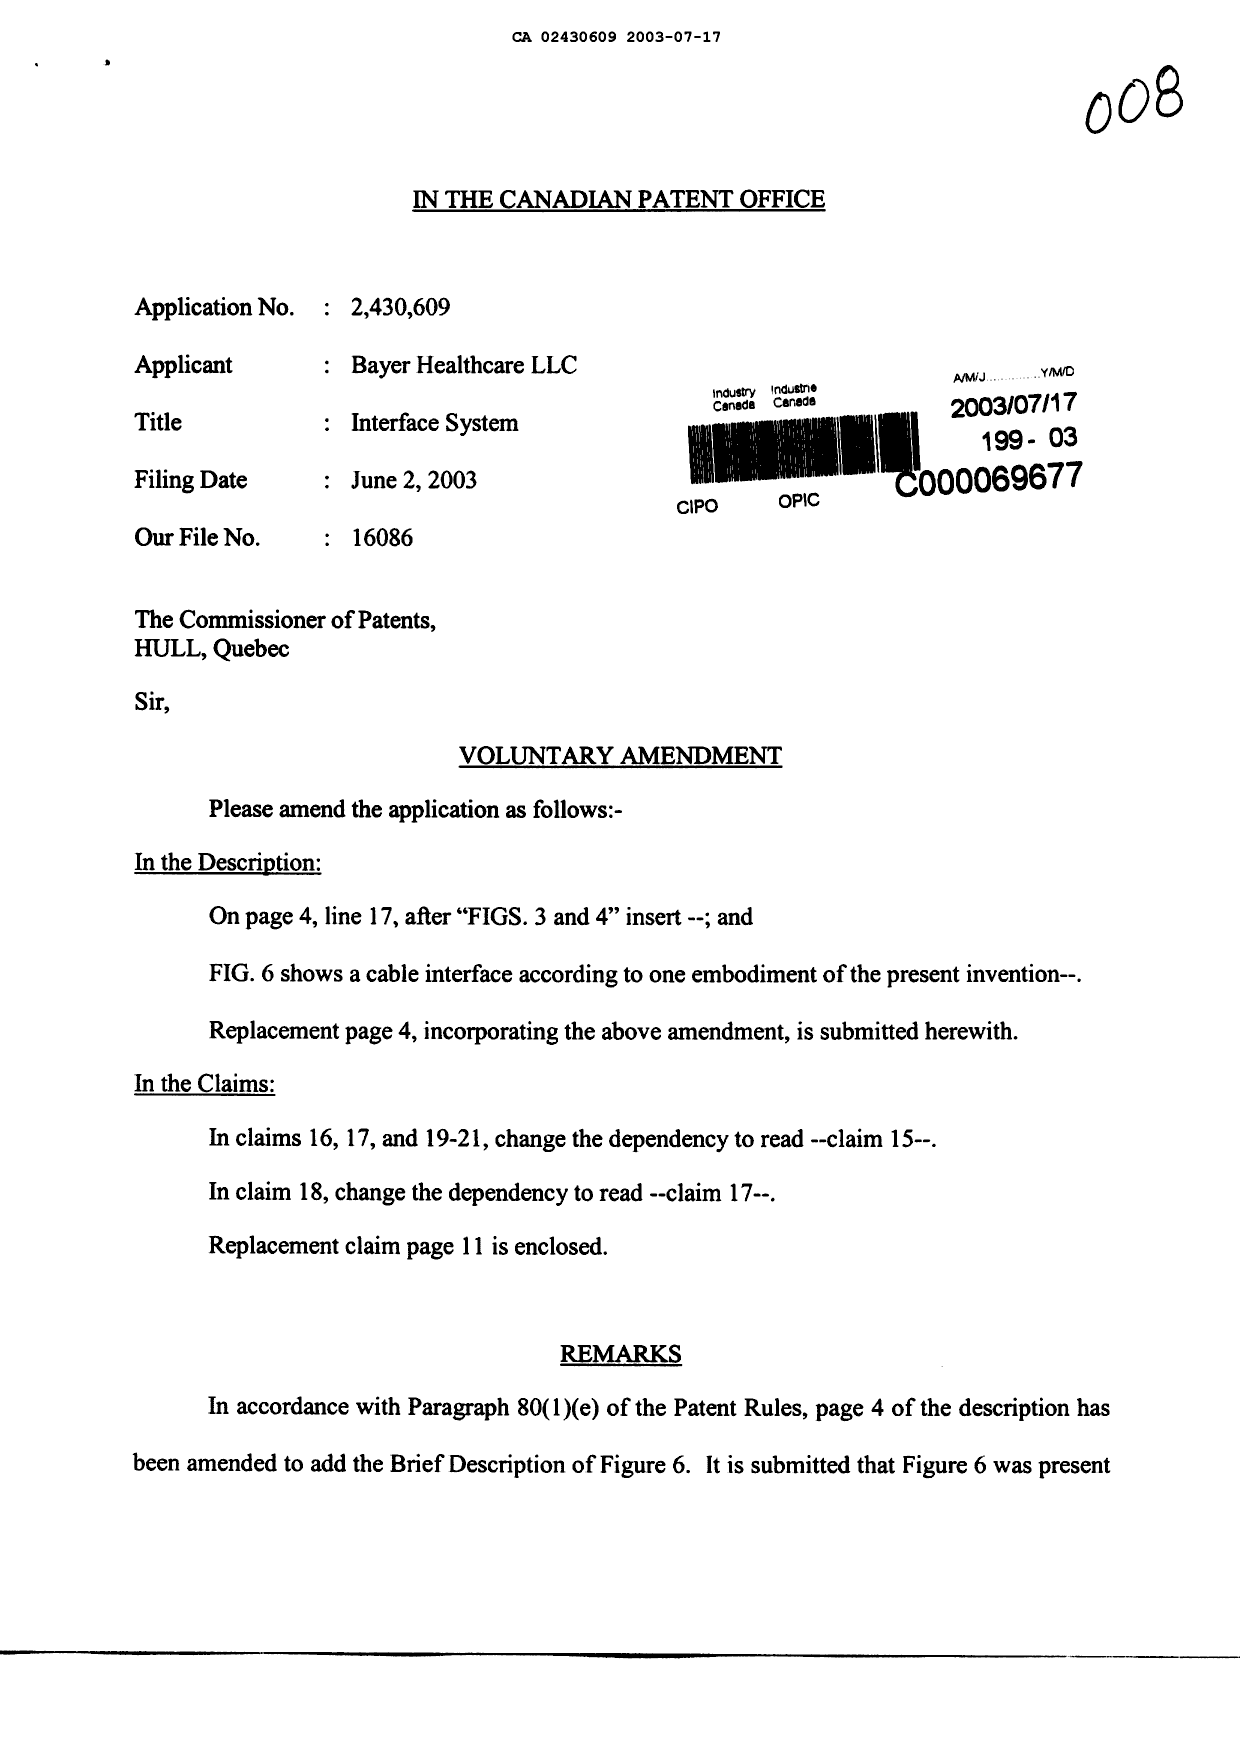 Canadian Patent Document 2430609. Prosecution-Amendment 20030717. Image 1 of 4